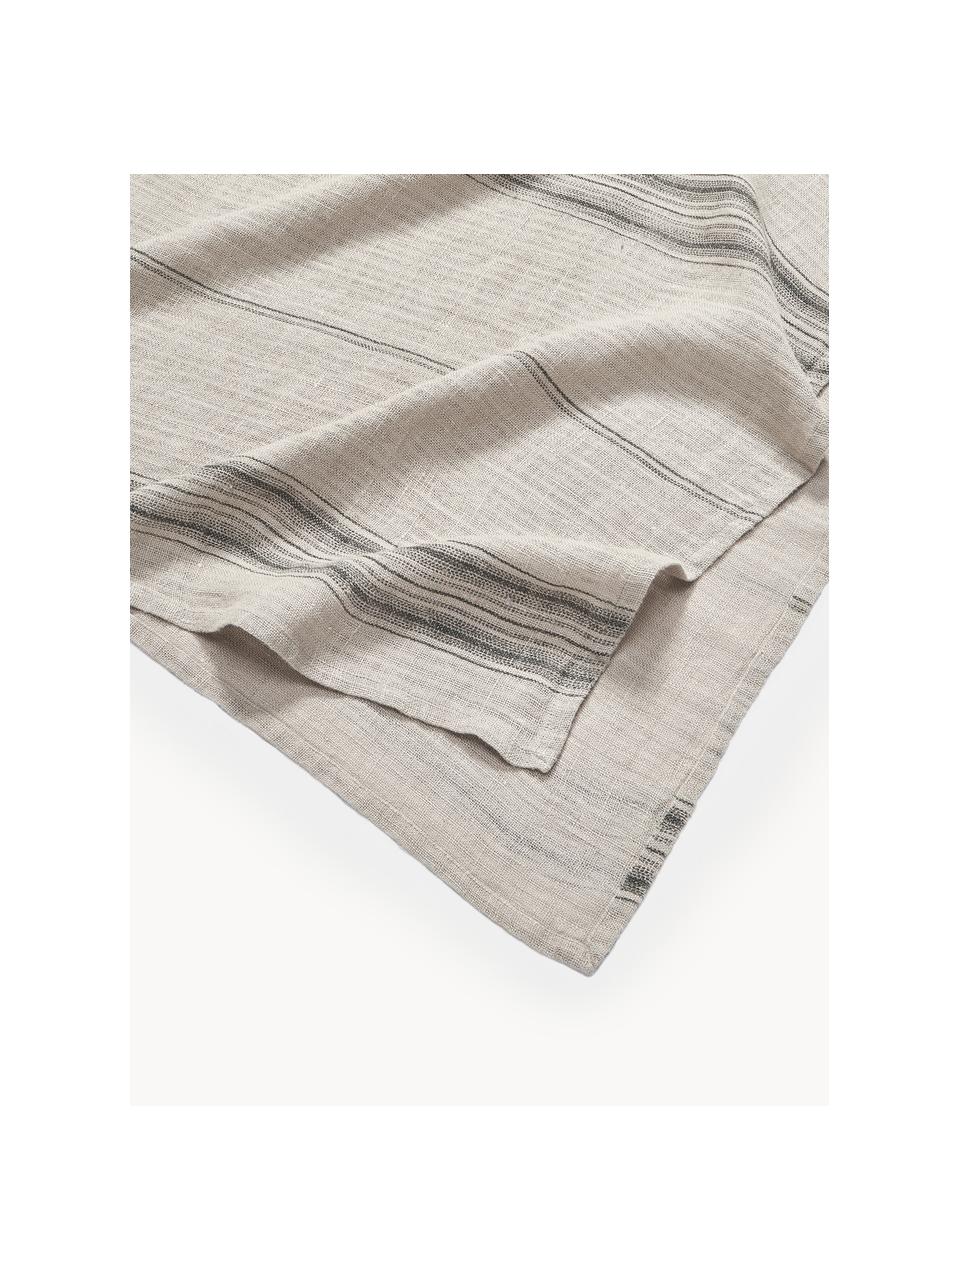 Mantel de lino Striped, 100% lino, Tonos grises, De 4 a 6 comensales (An 140 x L 220 cm)